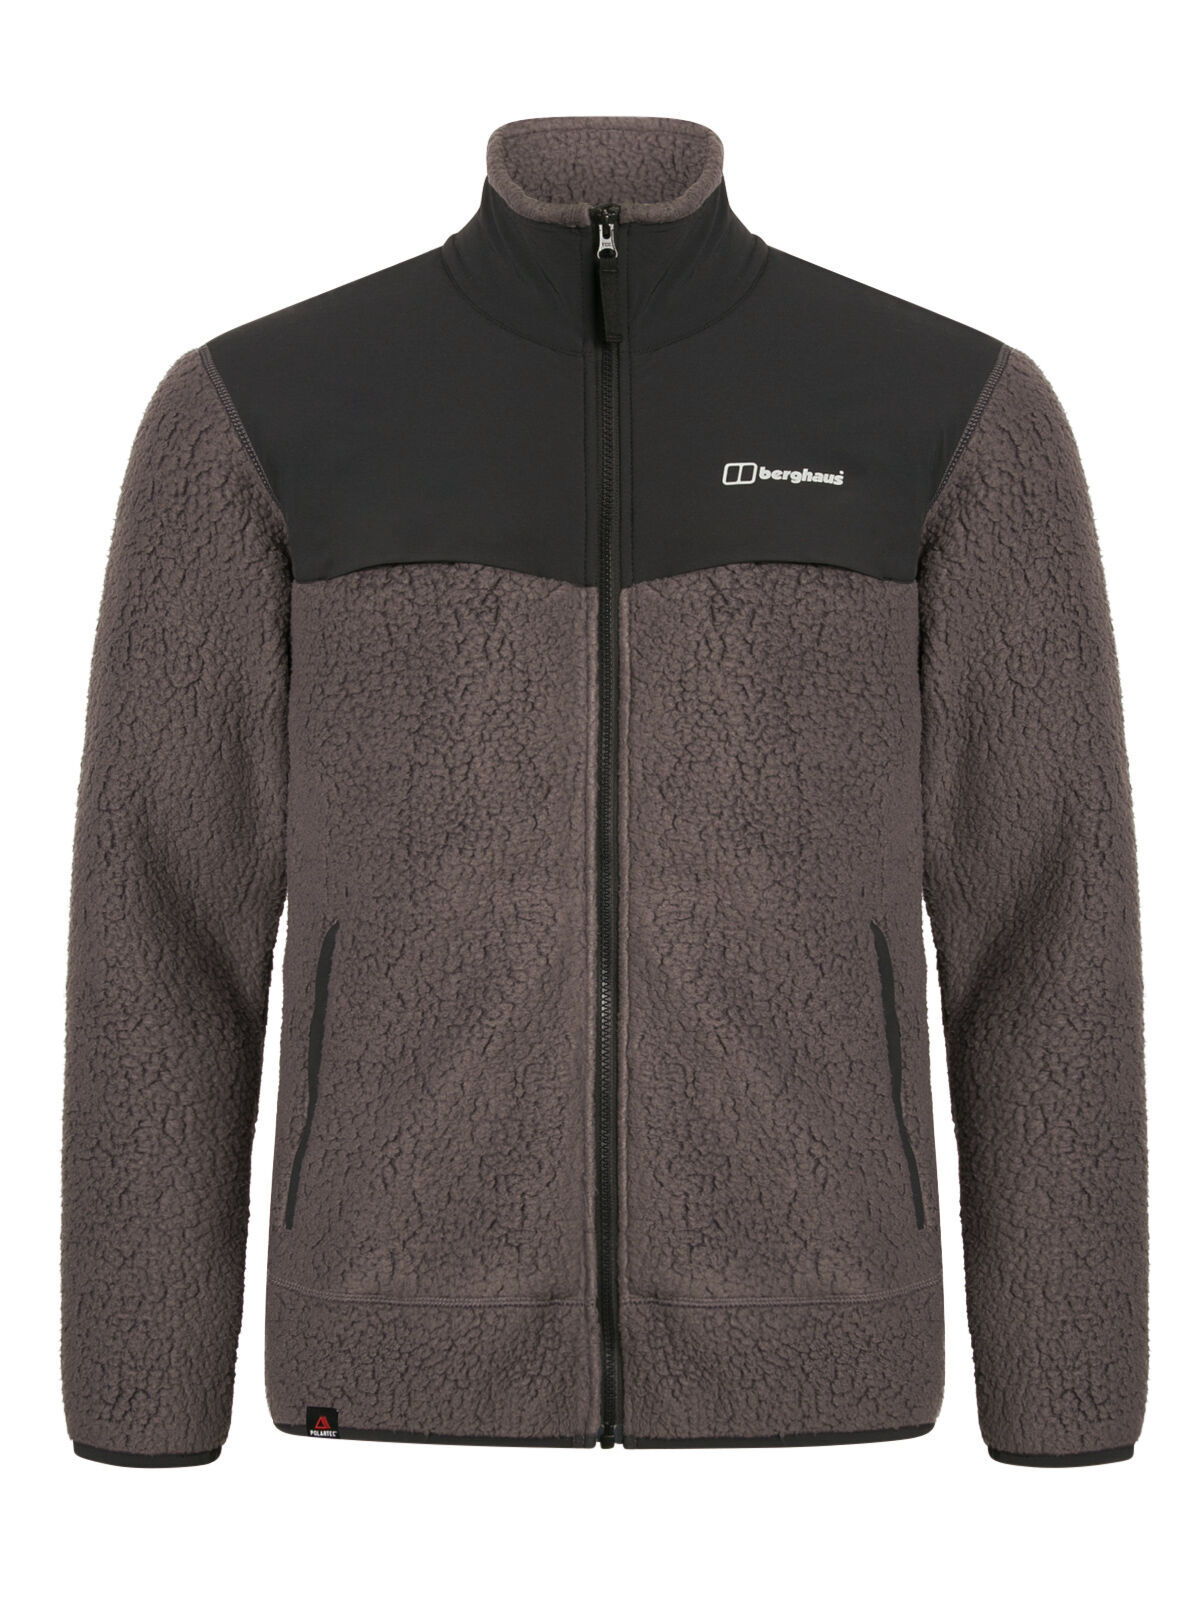 Berghaus Syker Fleece Jacket - Fleece jacket - Men's